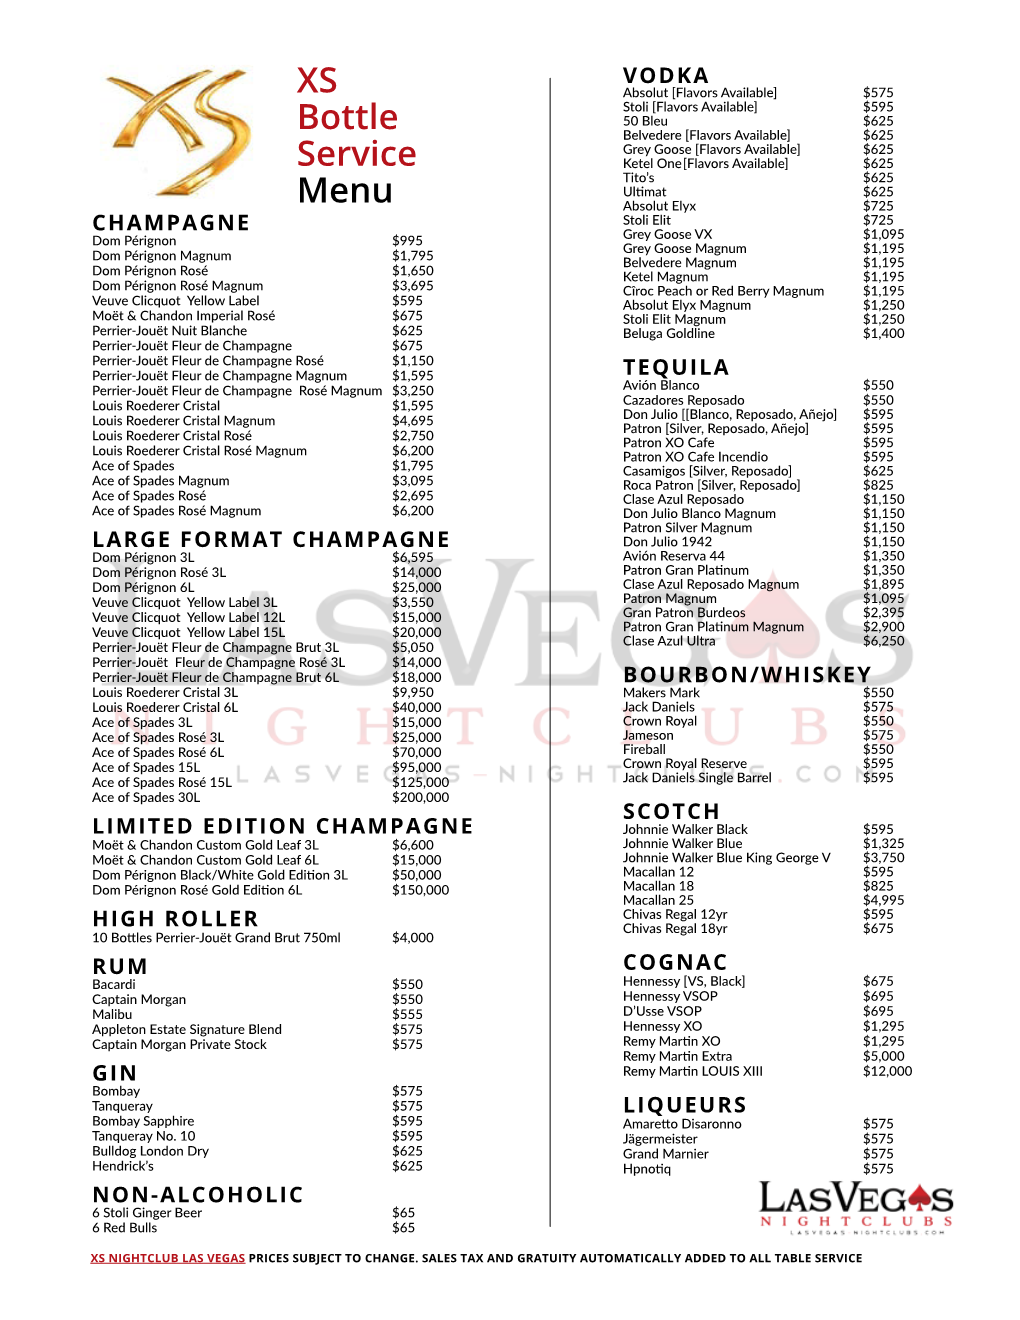 XS Bottle Service Menu Prices for Champagne & Liquor